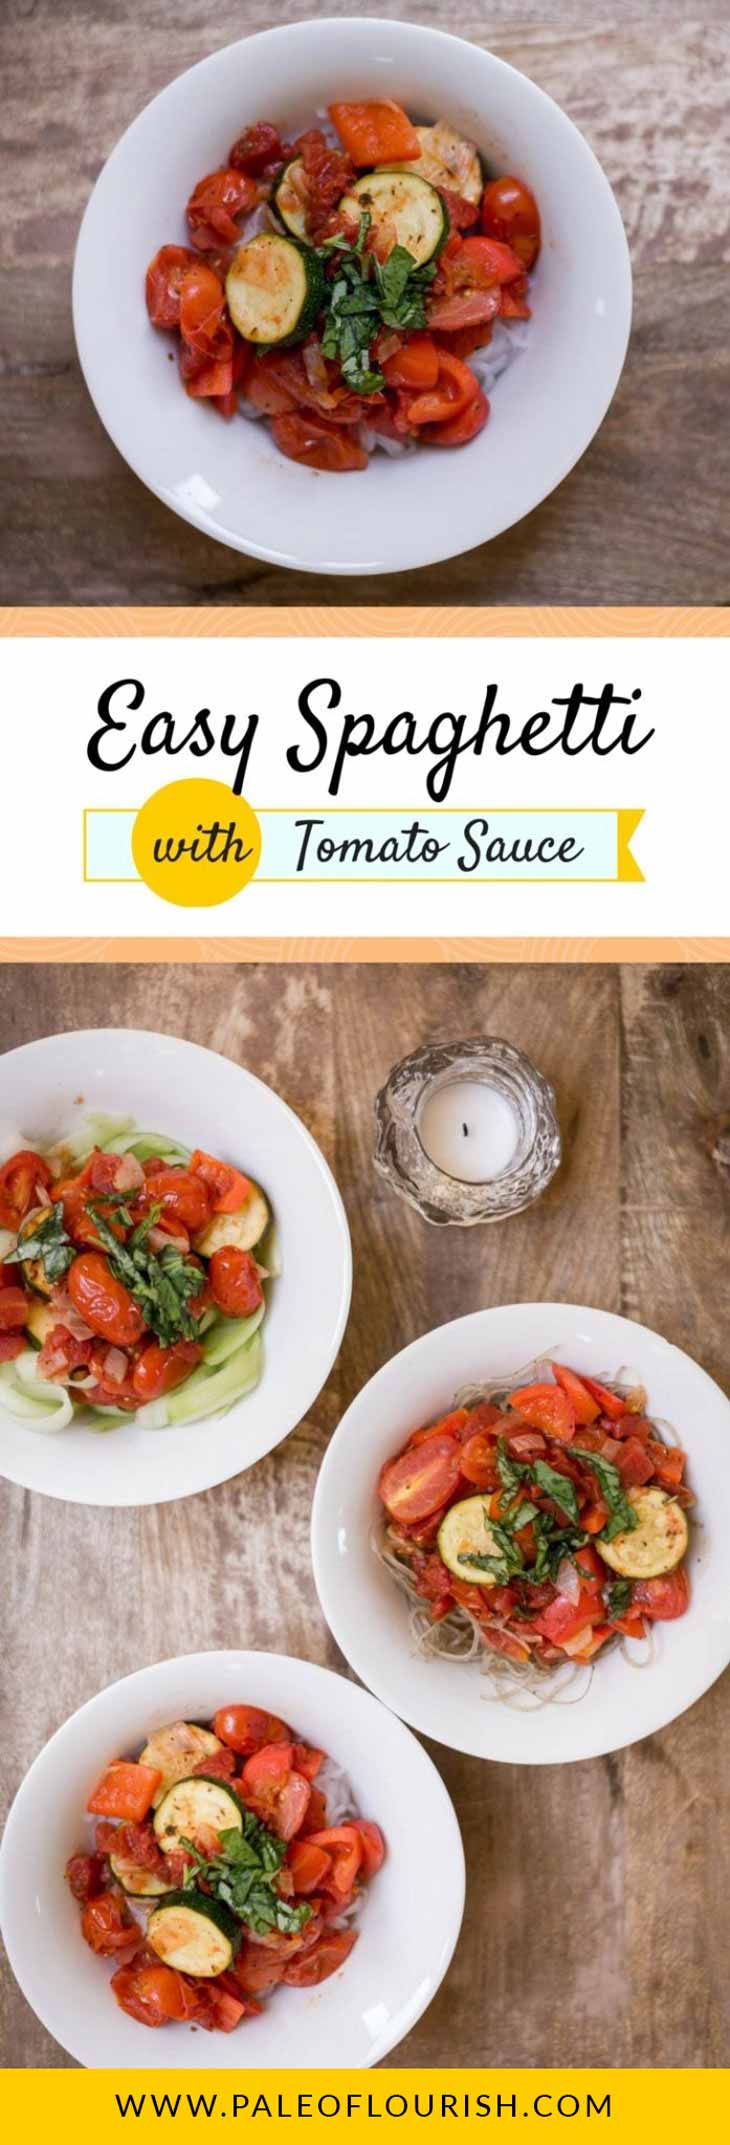 Easy Spaghetti with Tomato Sauce  #paleo #recipes #glutenfree https://paleoflourish.com/easy-spaghetti-with-tomato-sauce